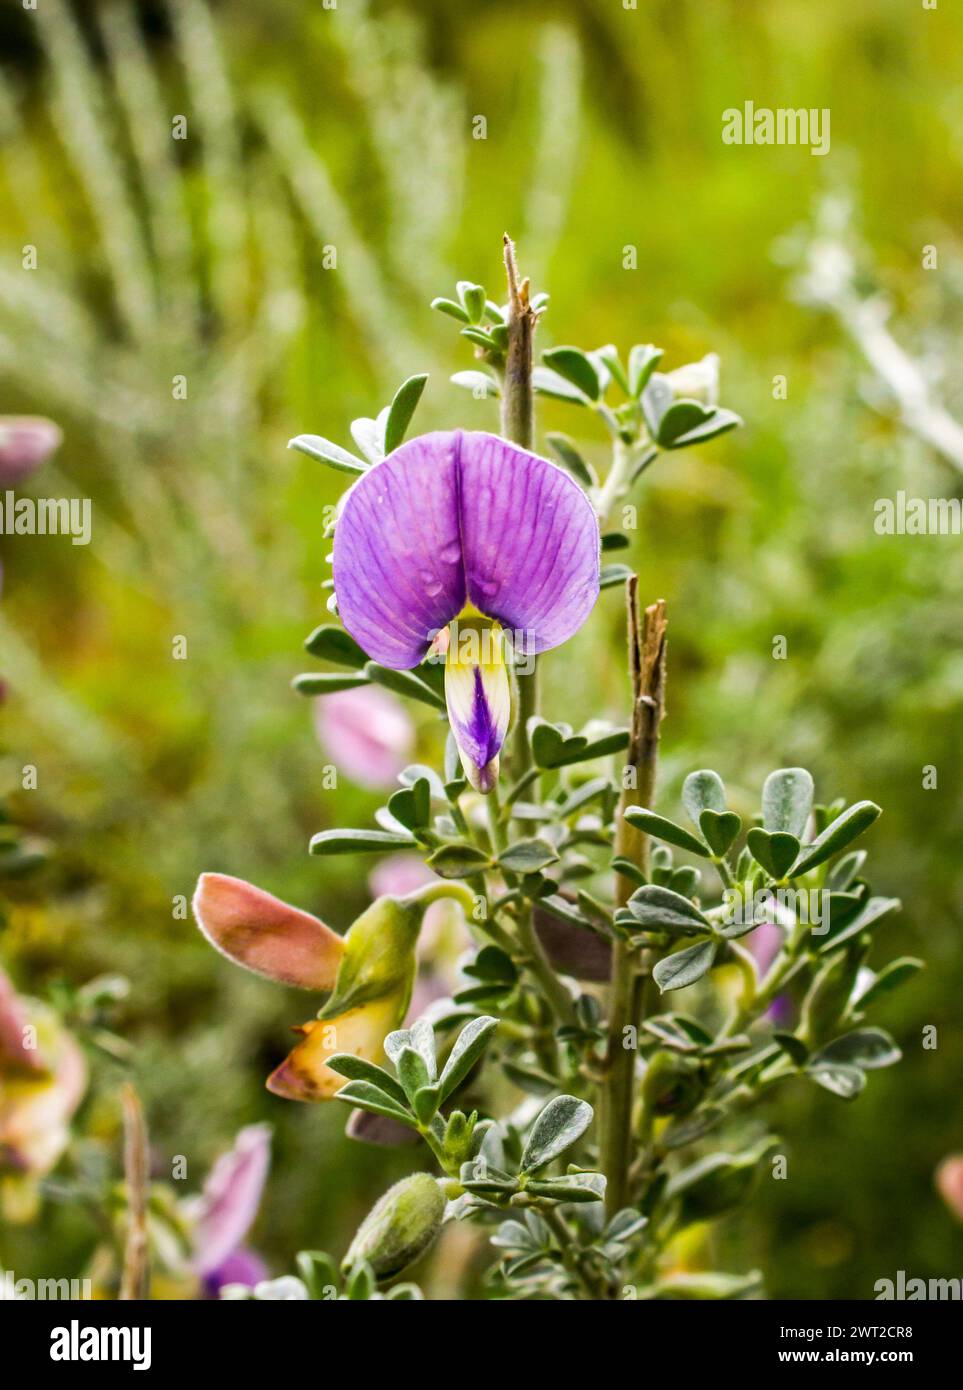 A small, delicate purple pea-like wildflower Stock Photo